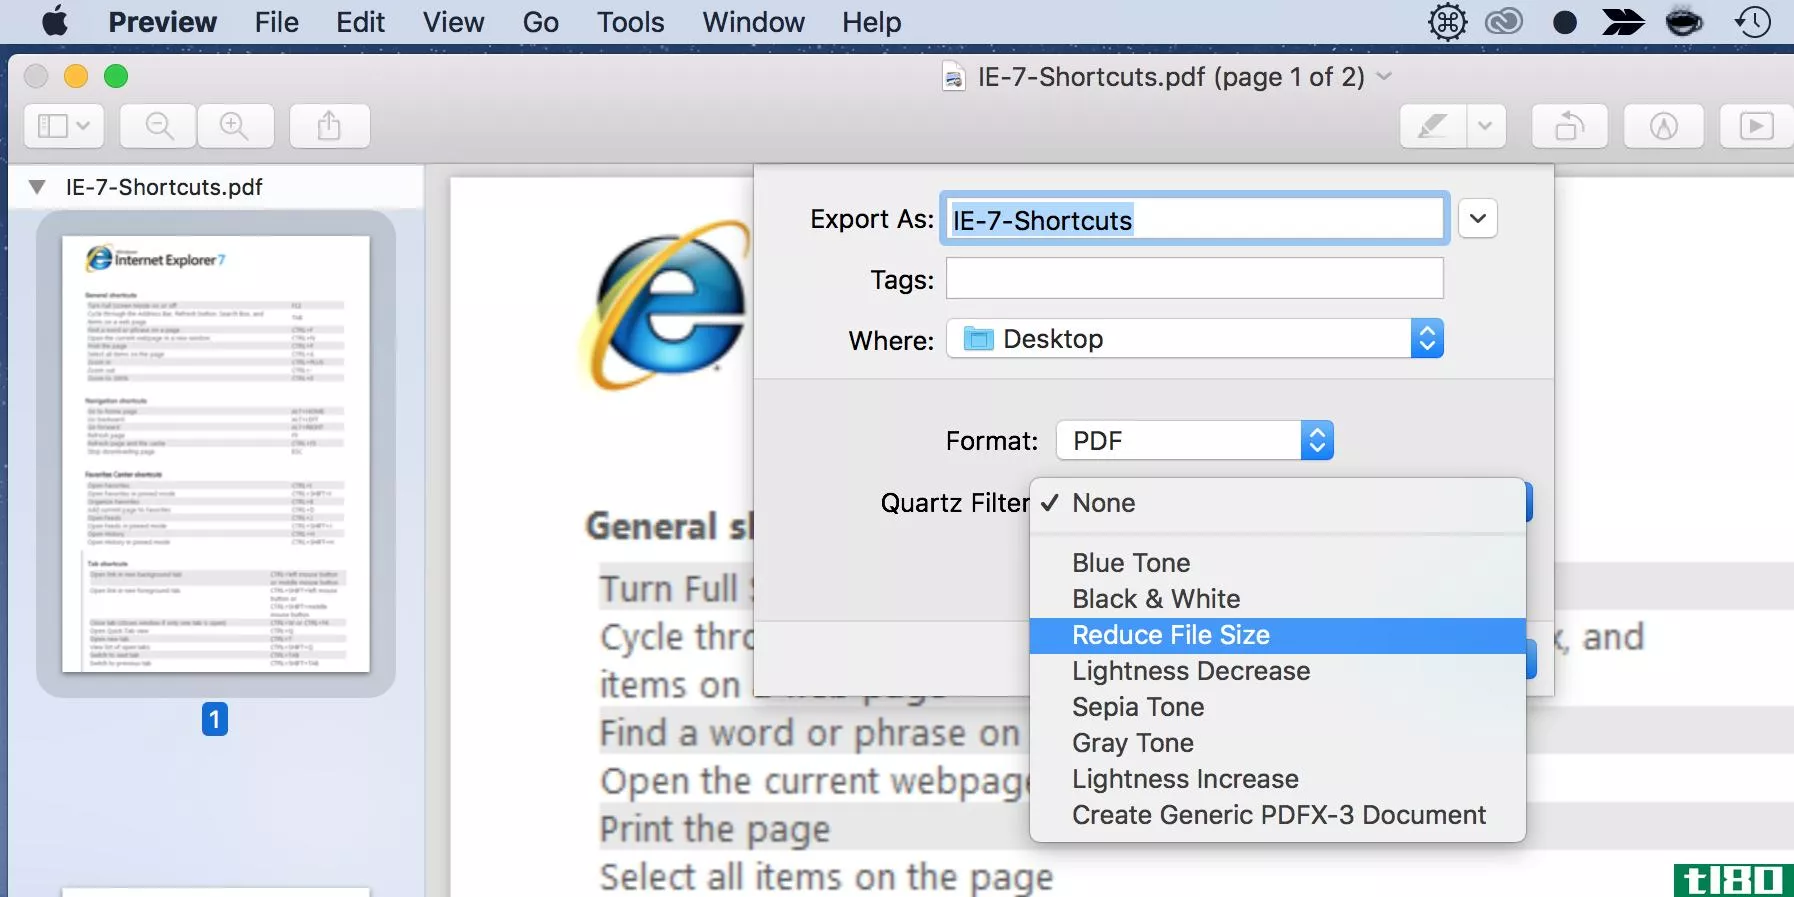 Compress a PDF using Preview